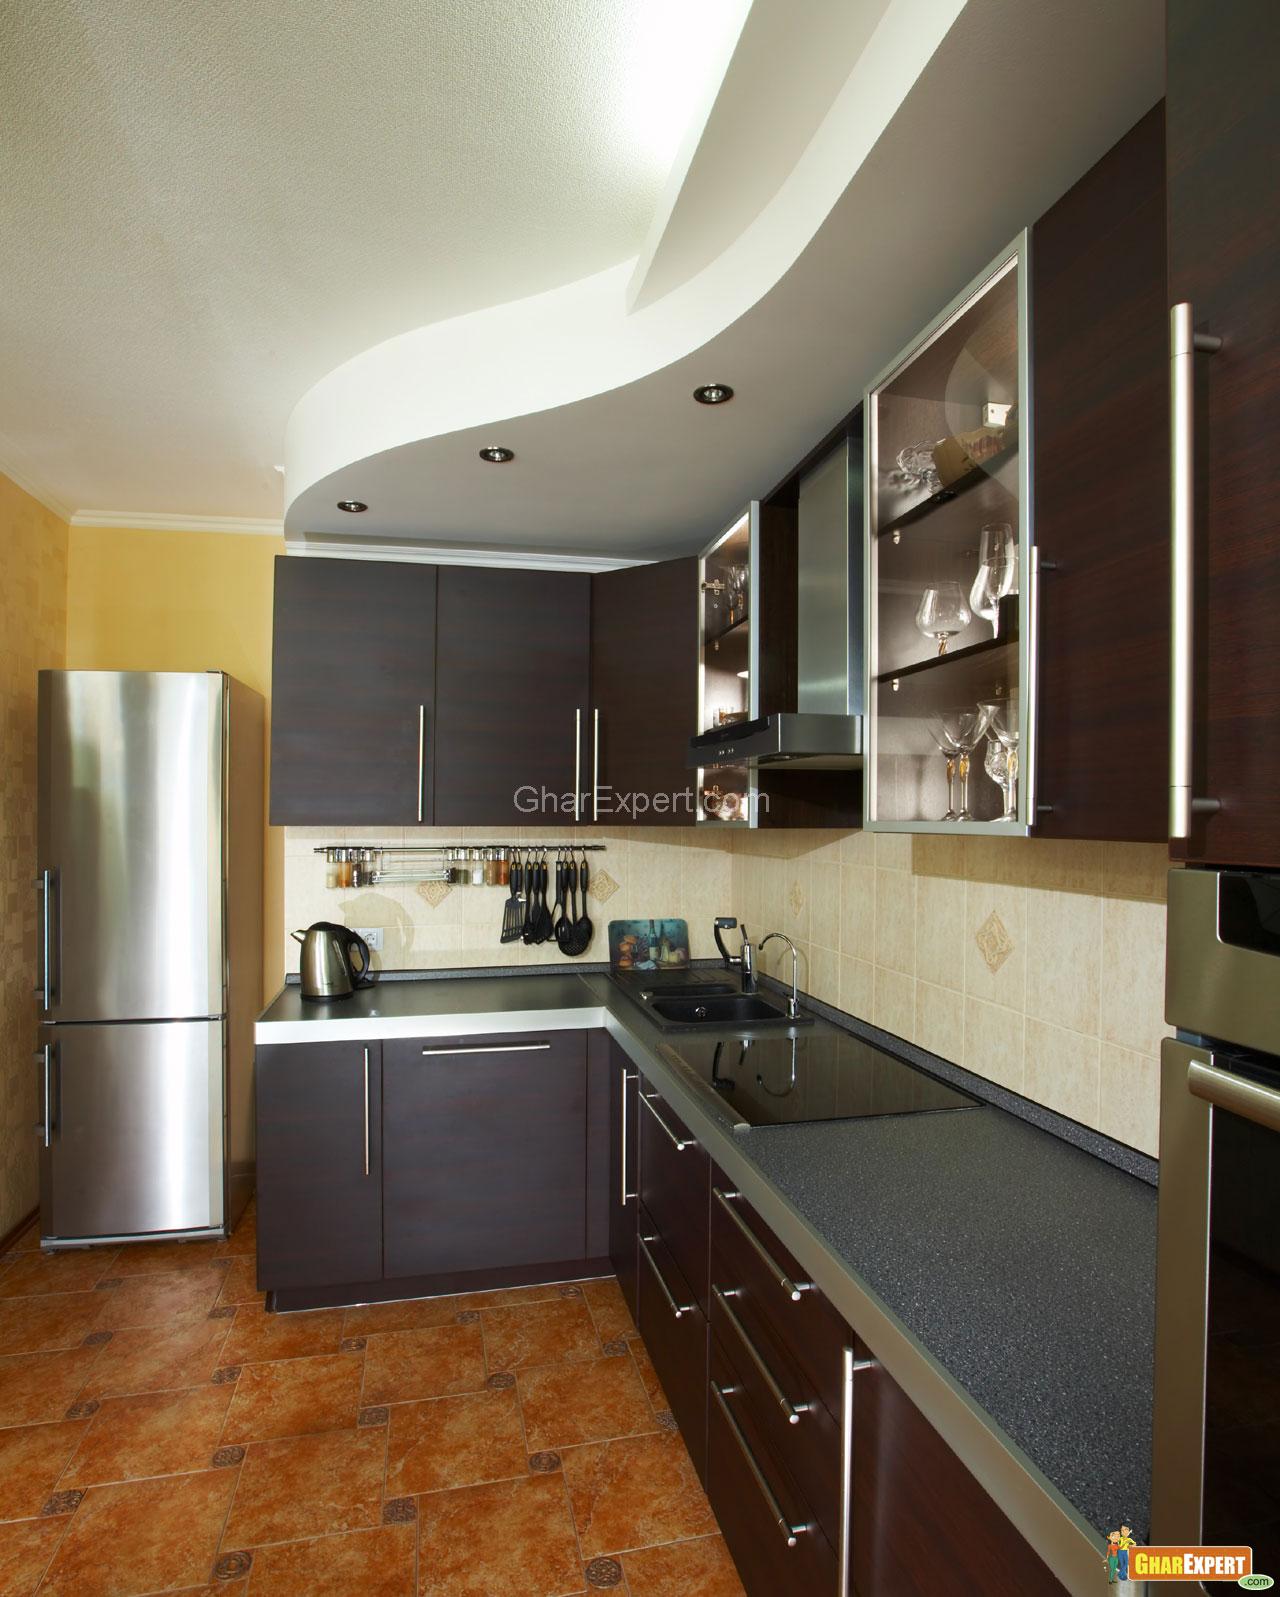 Kitchen Pantry Designs | Kitchen Pantry Storage | Kitchen Pantries ...